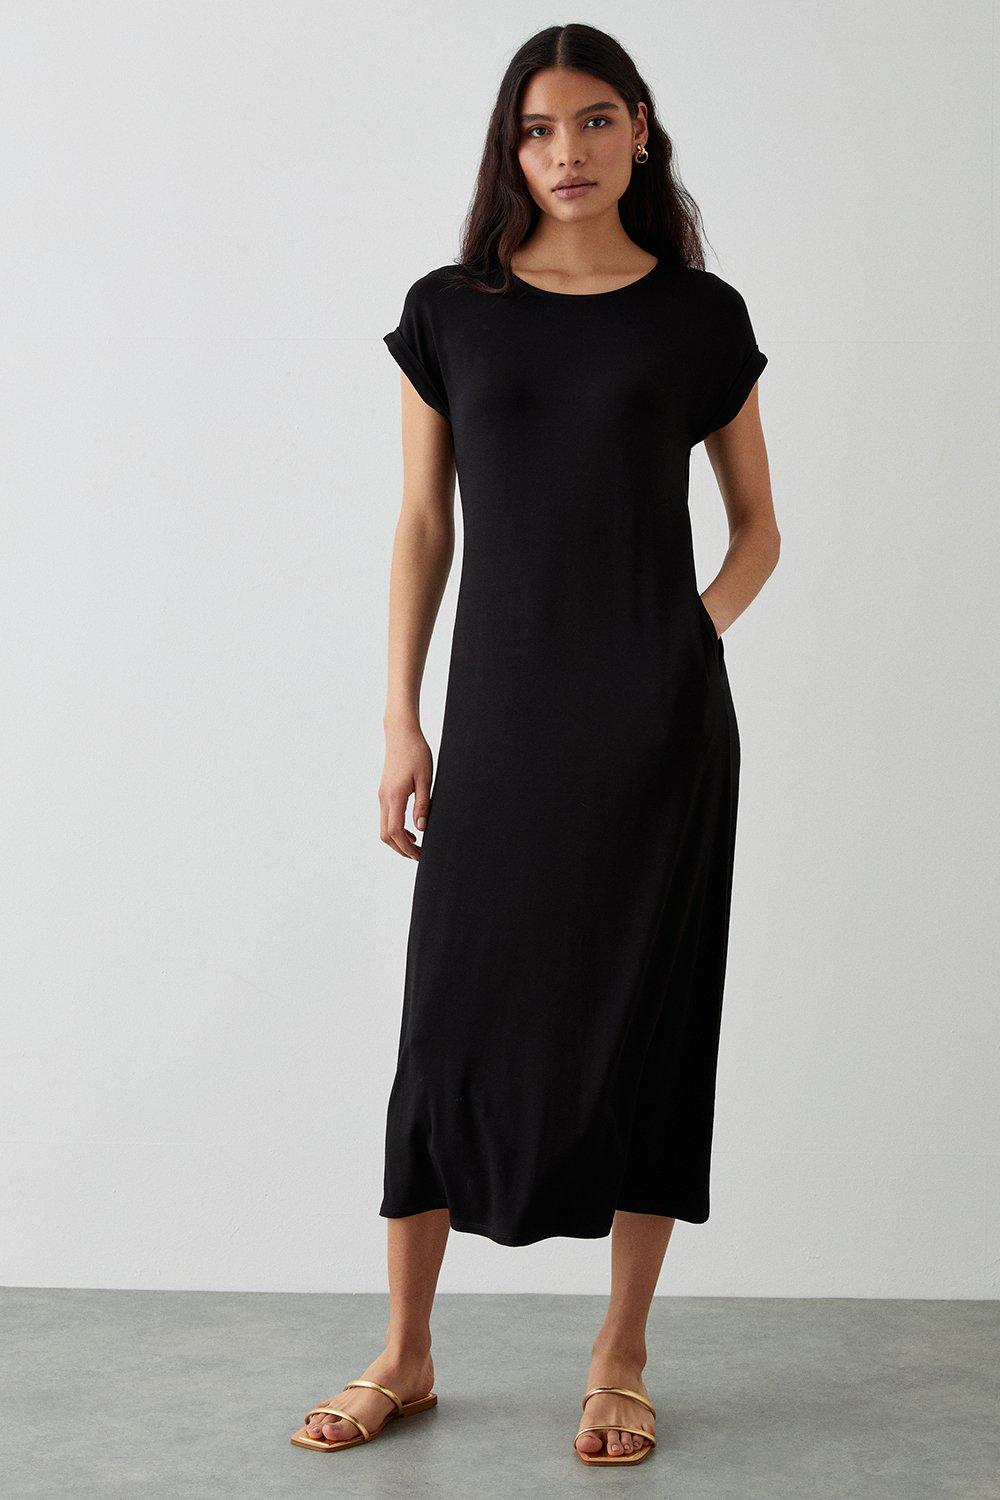 Women’s Black Column Midi Dress With Pockets - 18